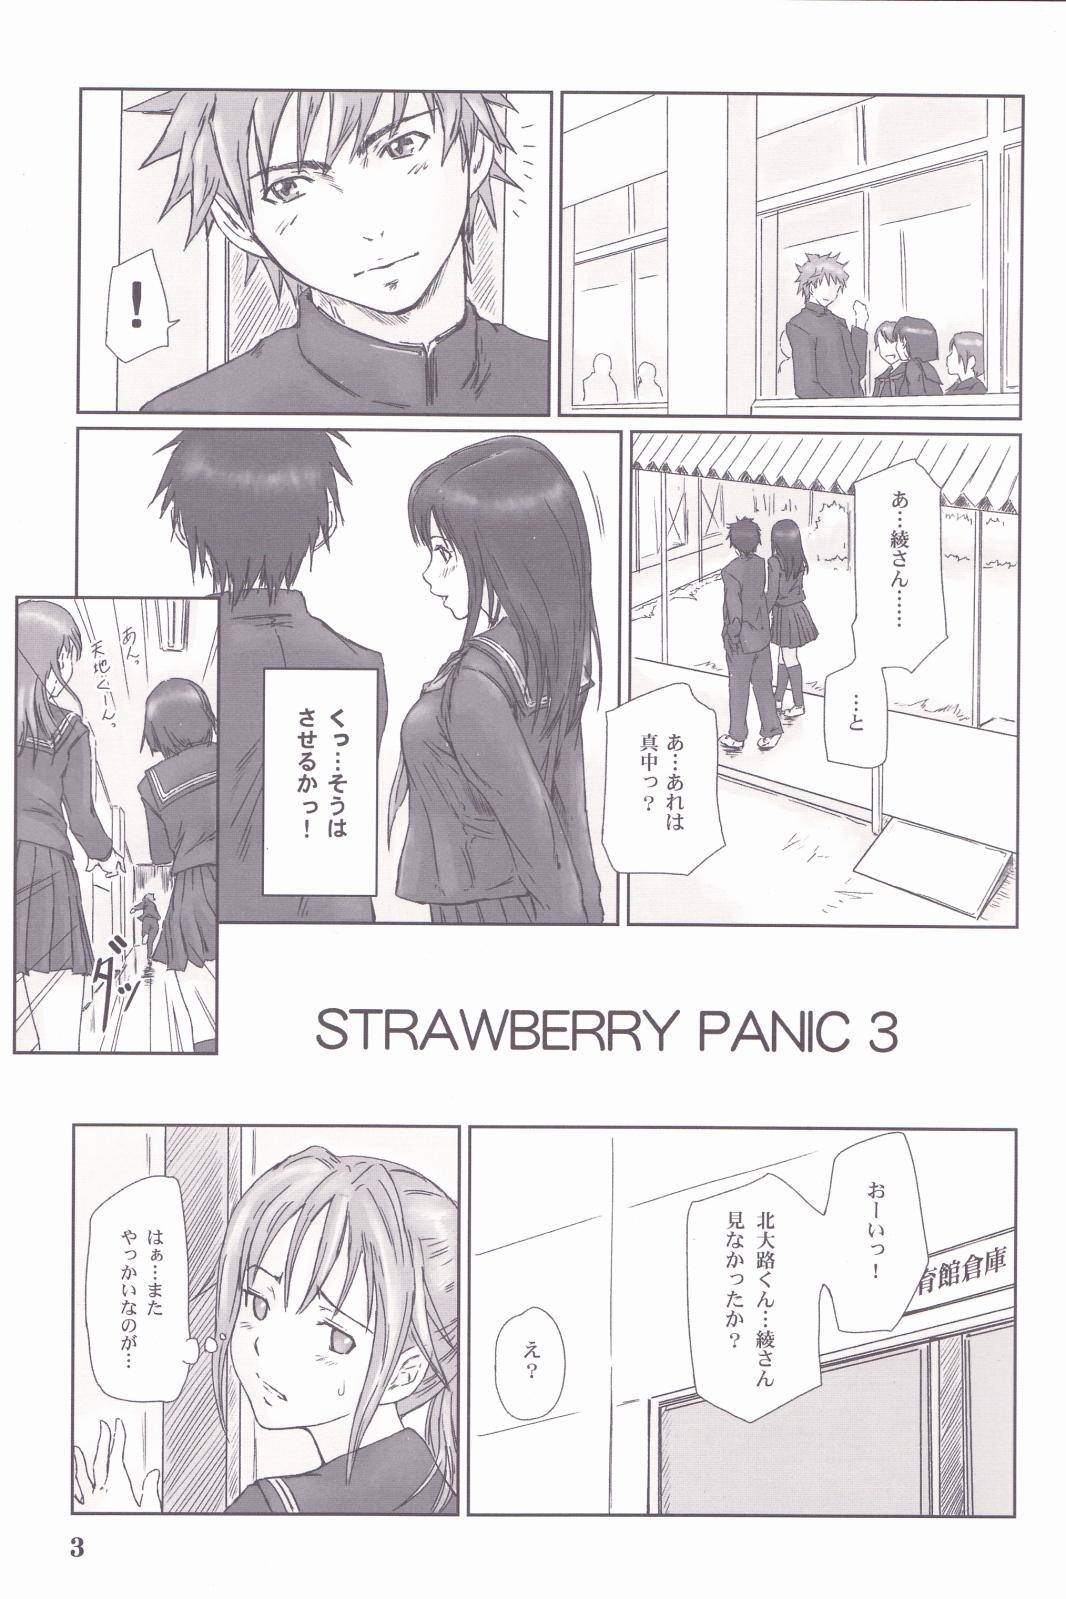 Tribbing STRAWBERRY PANIC 3 - Ichigo 100 Sexy - Page 2